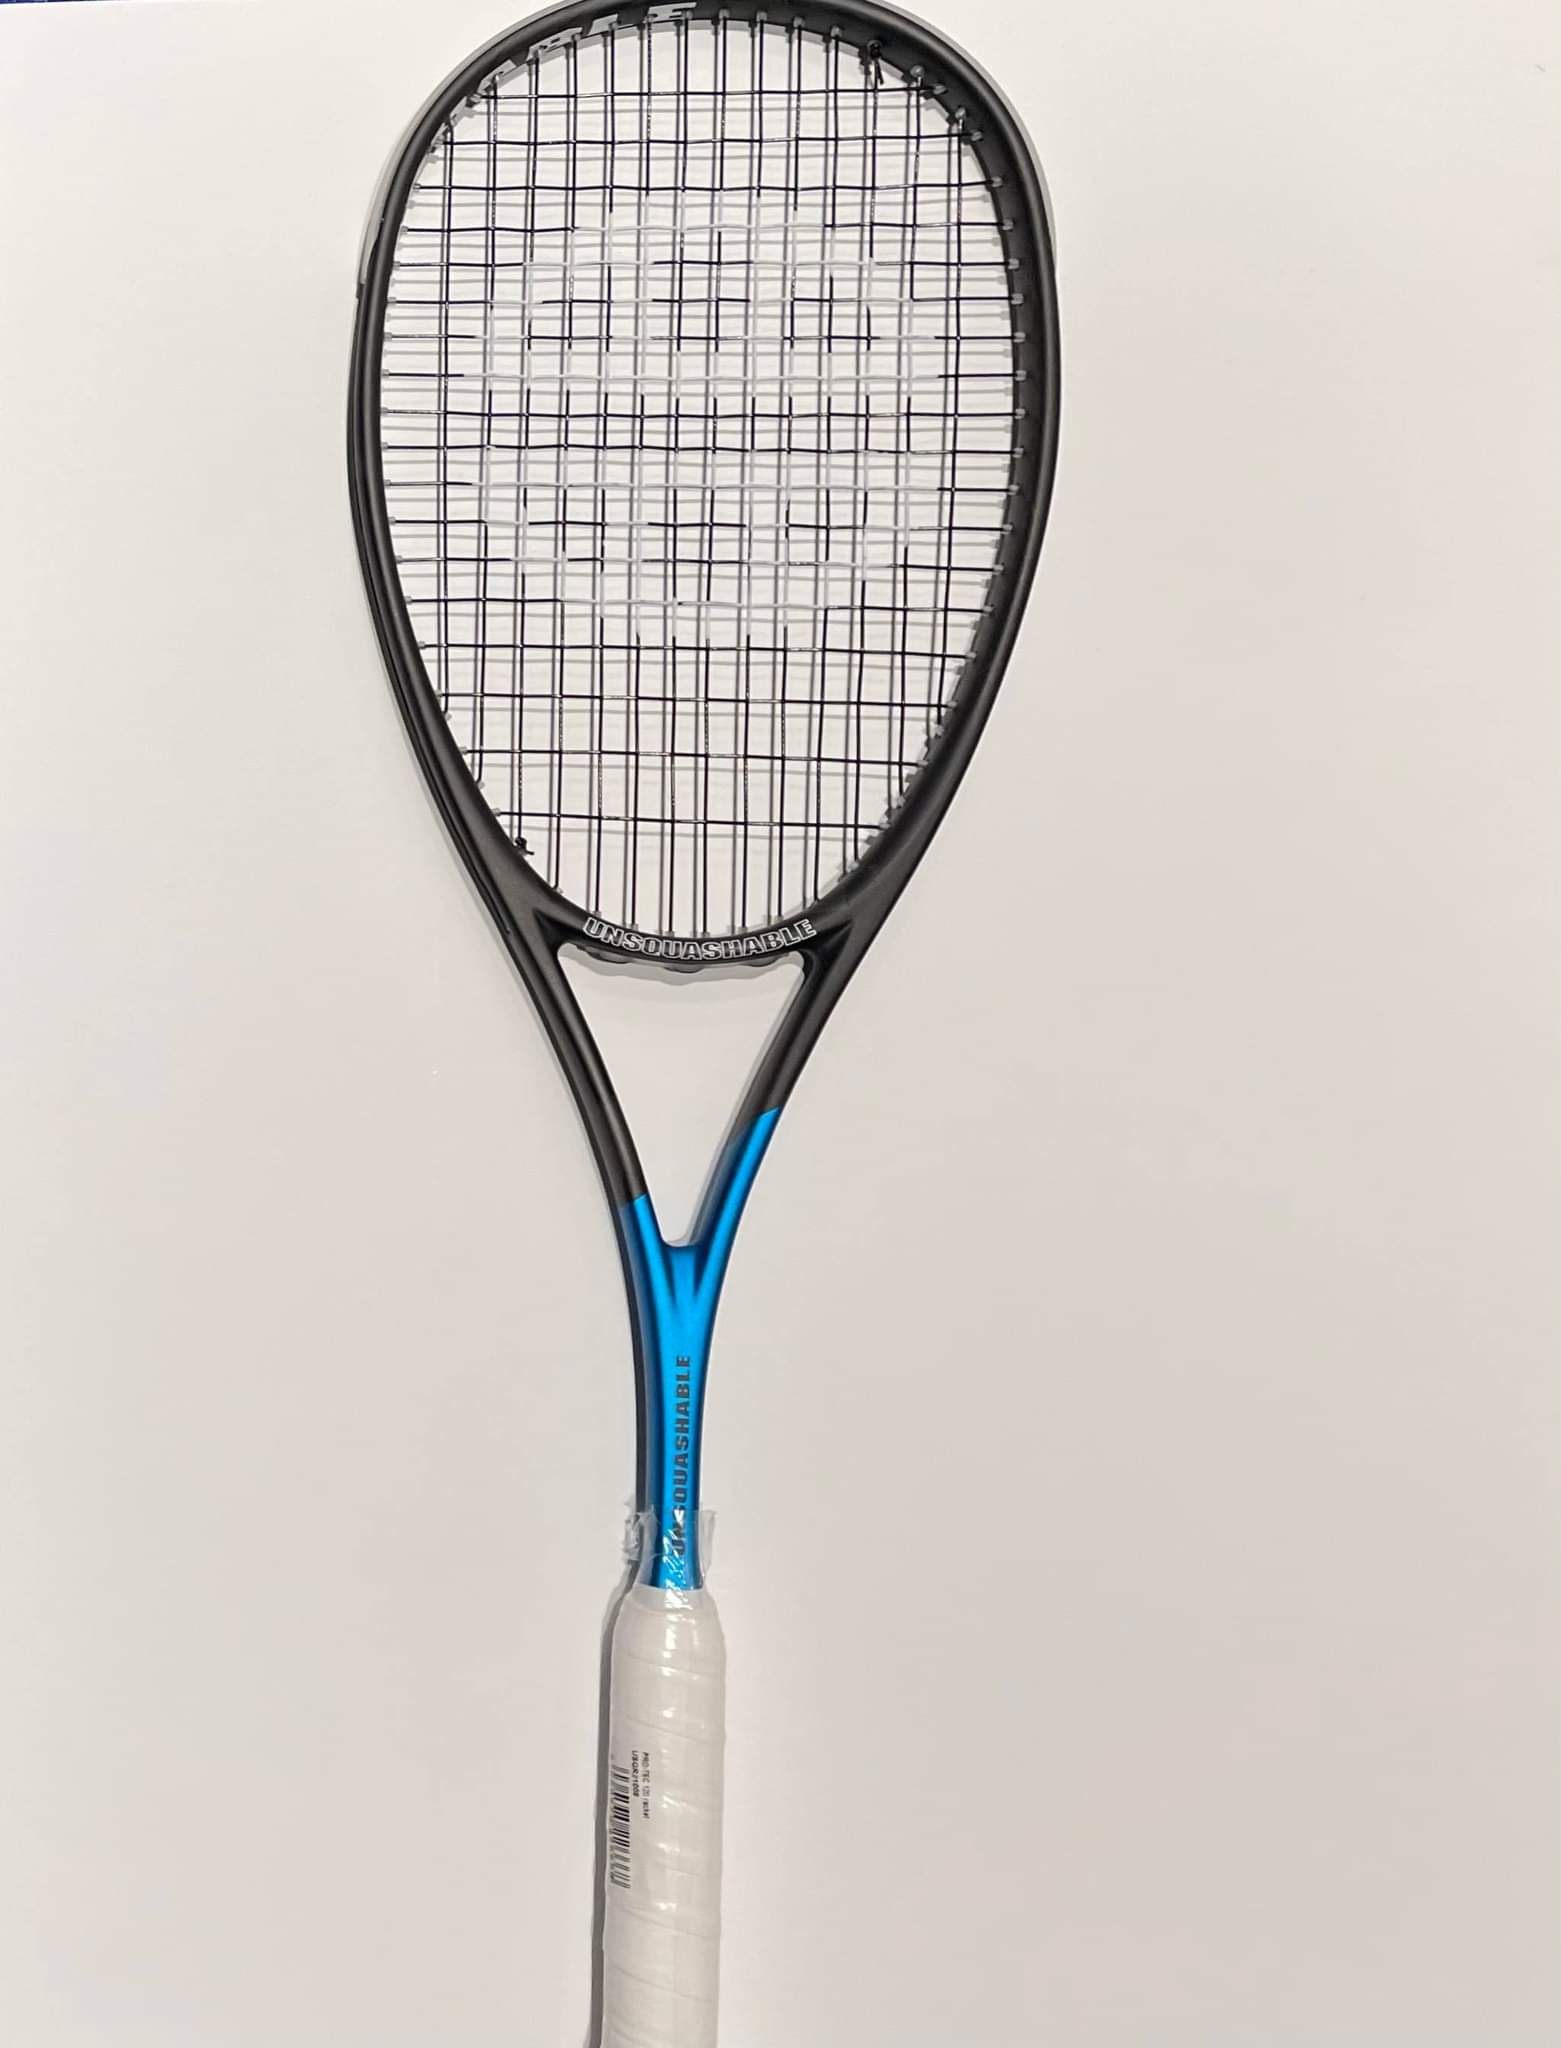 UNSQUASHABLE Pro-Tec 120 squash racket